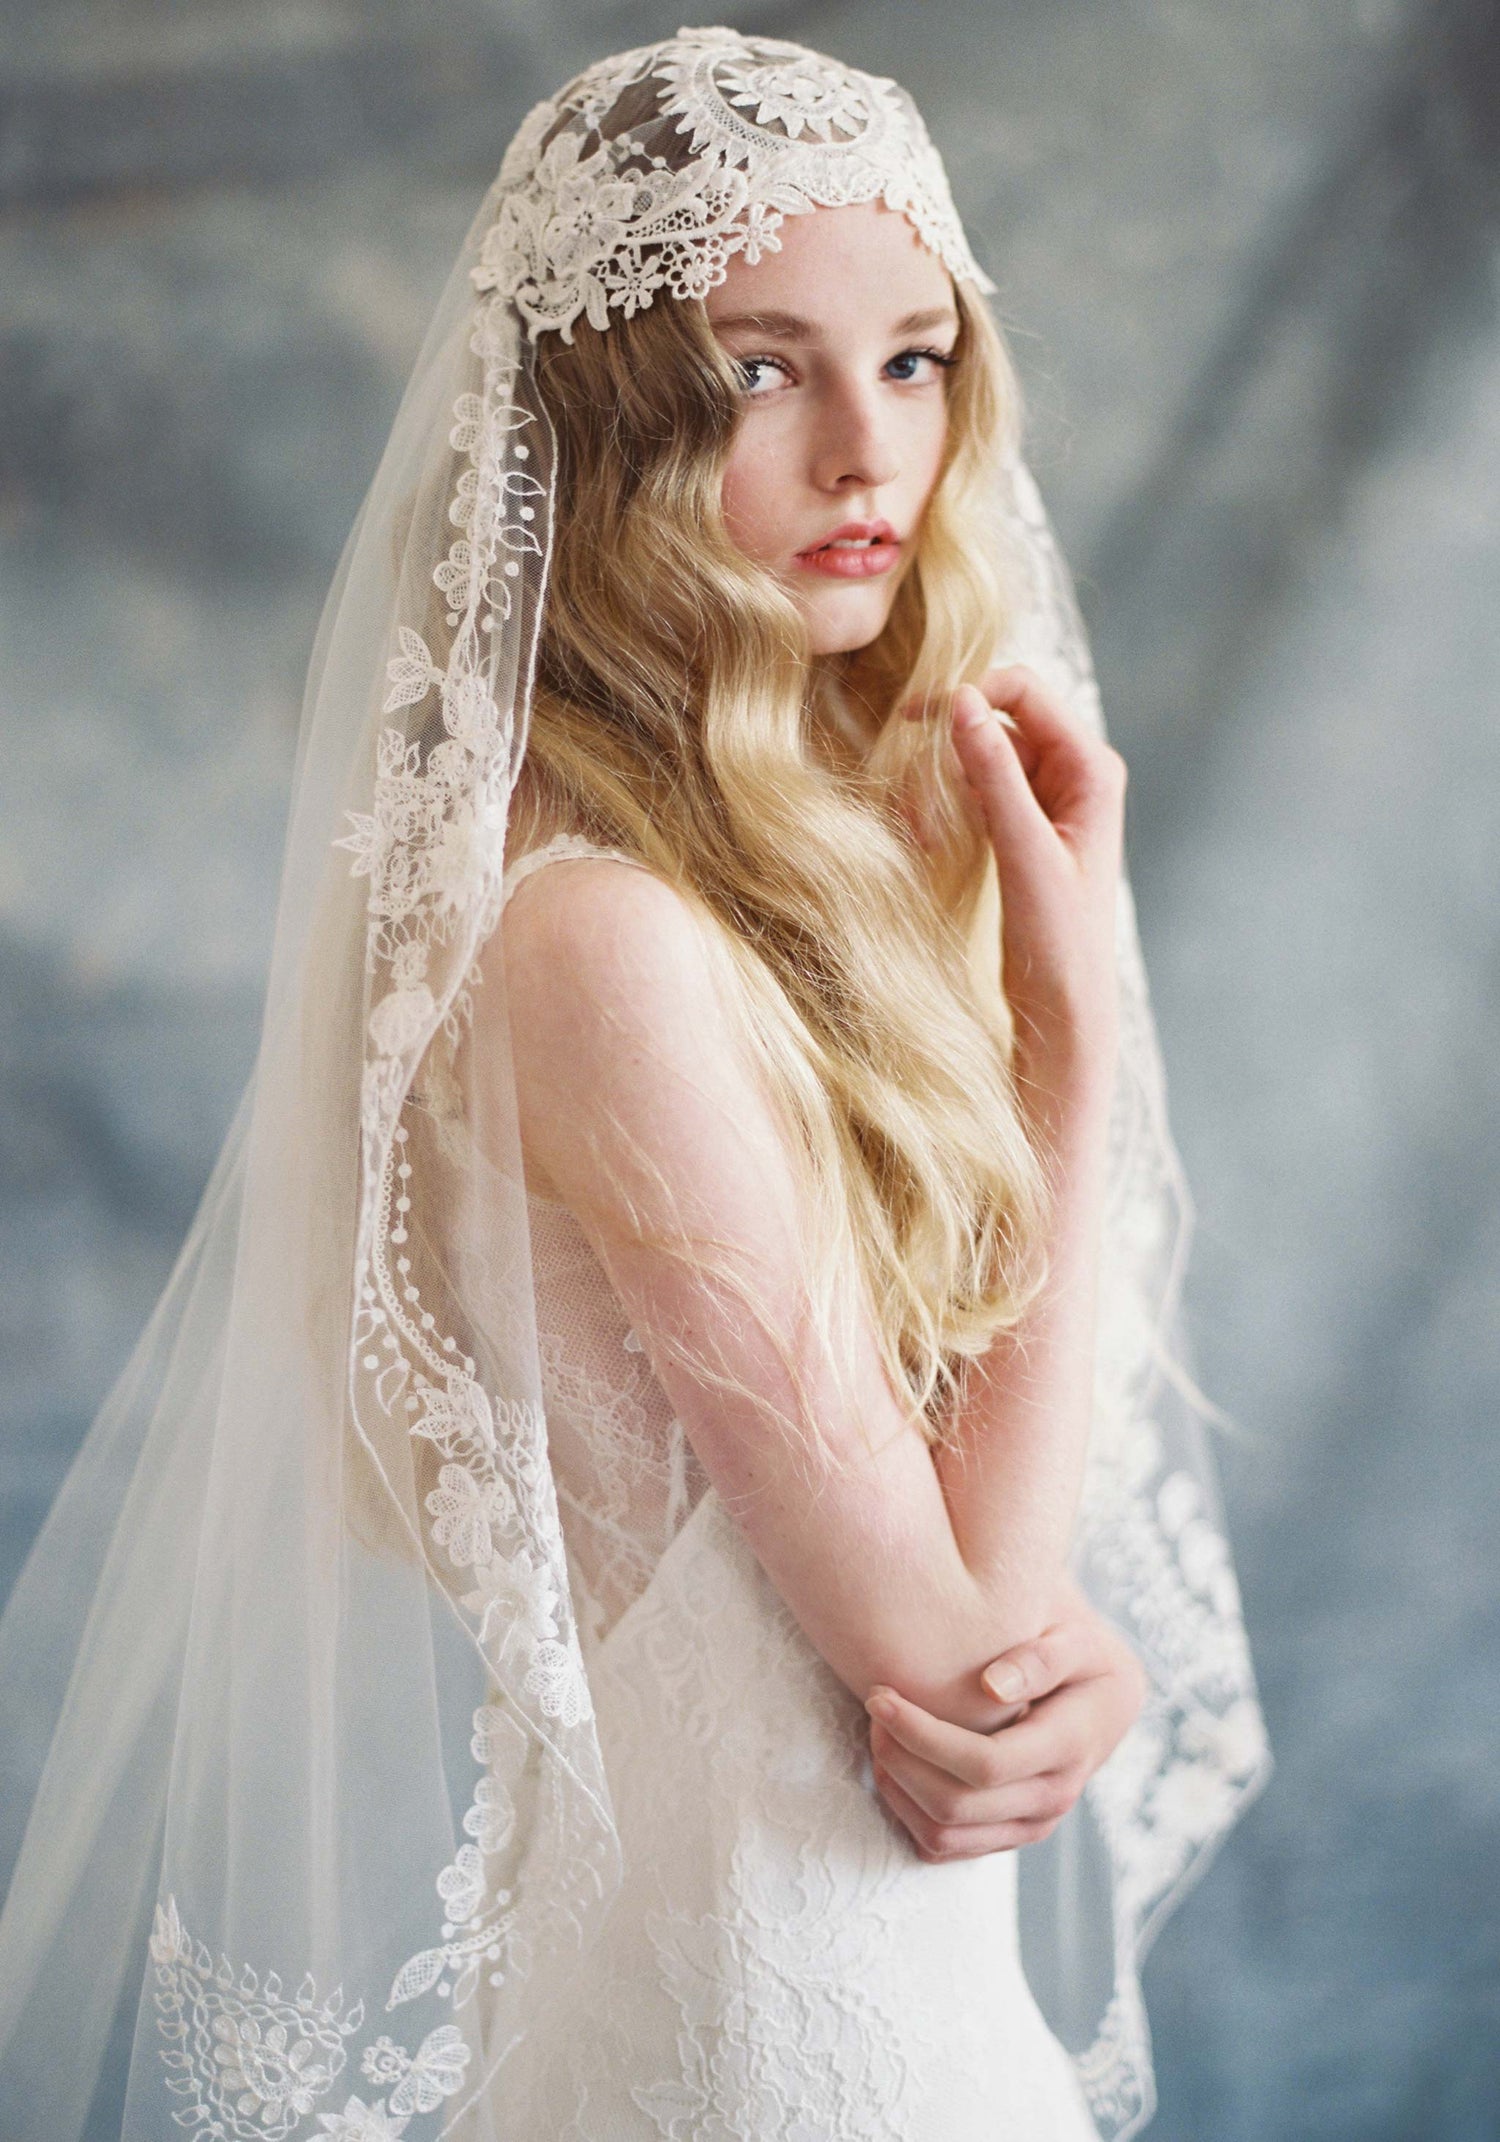 Lace Fingertip Wedding Veil, White / Off White / Ivory Bridal Veil